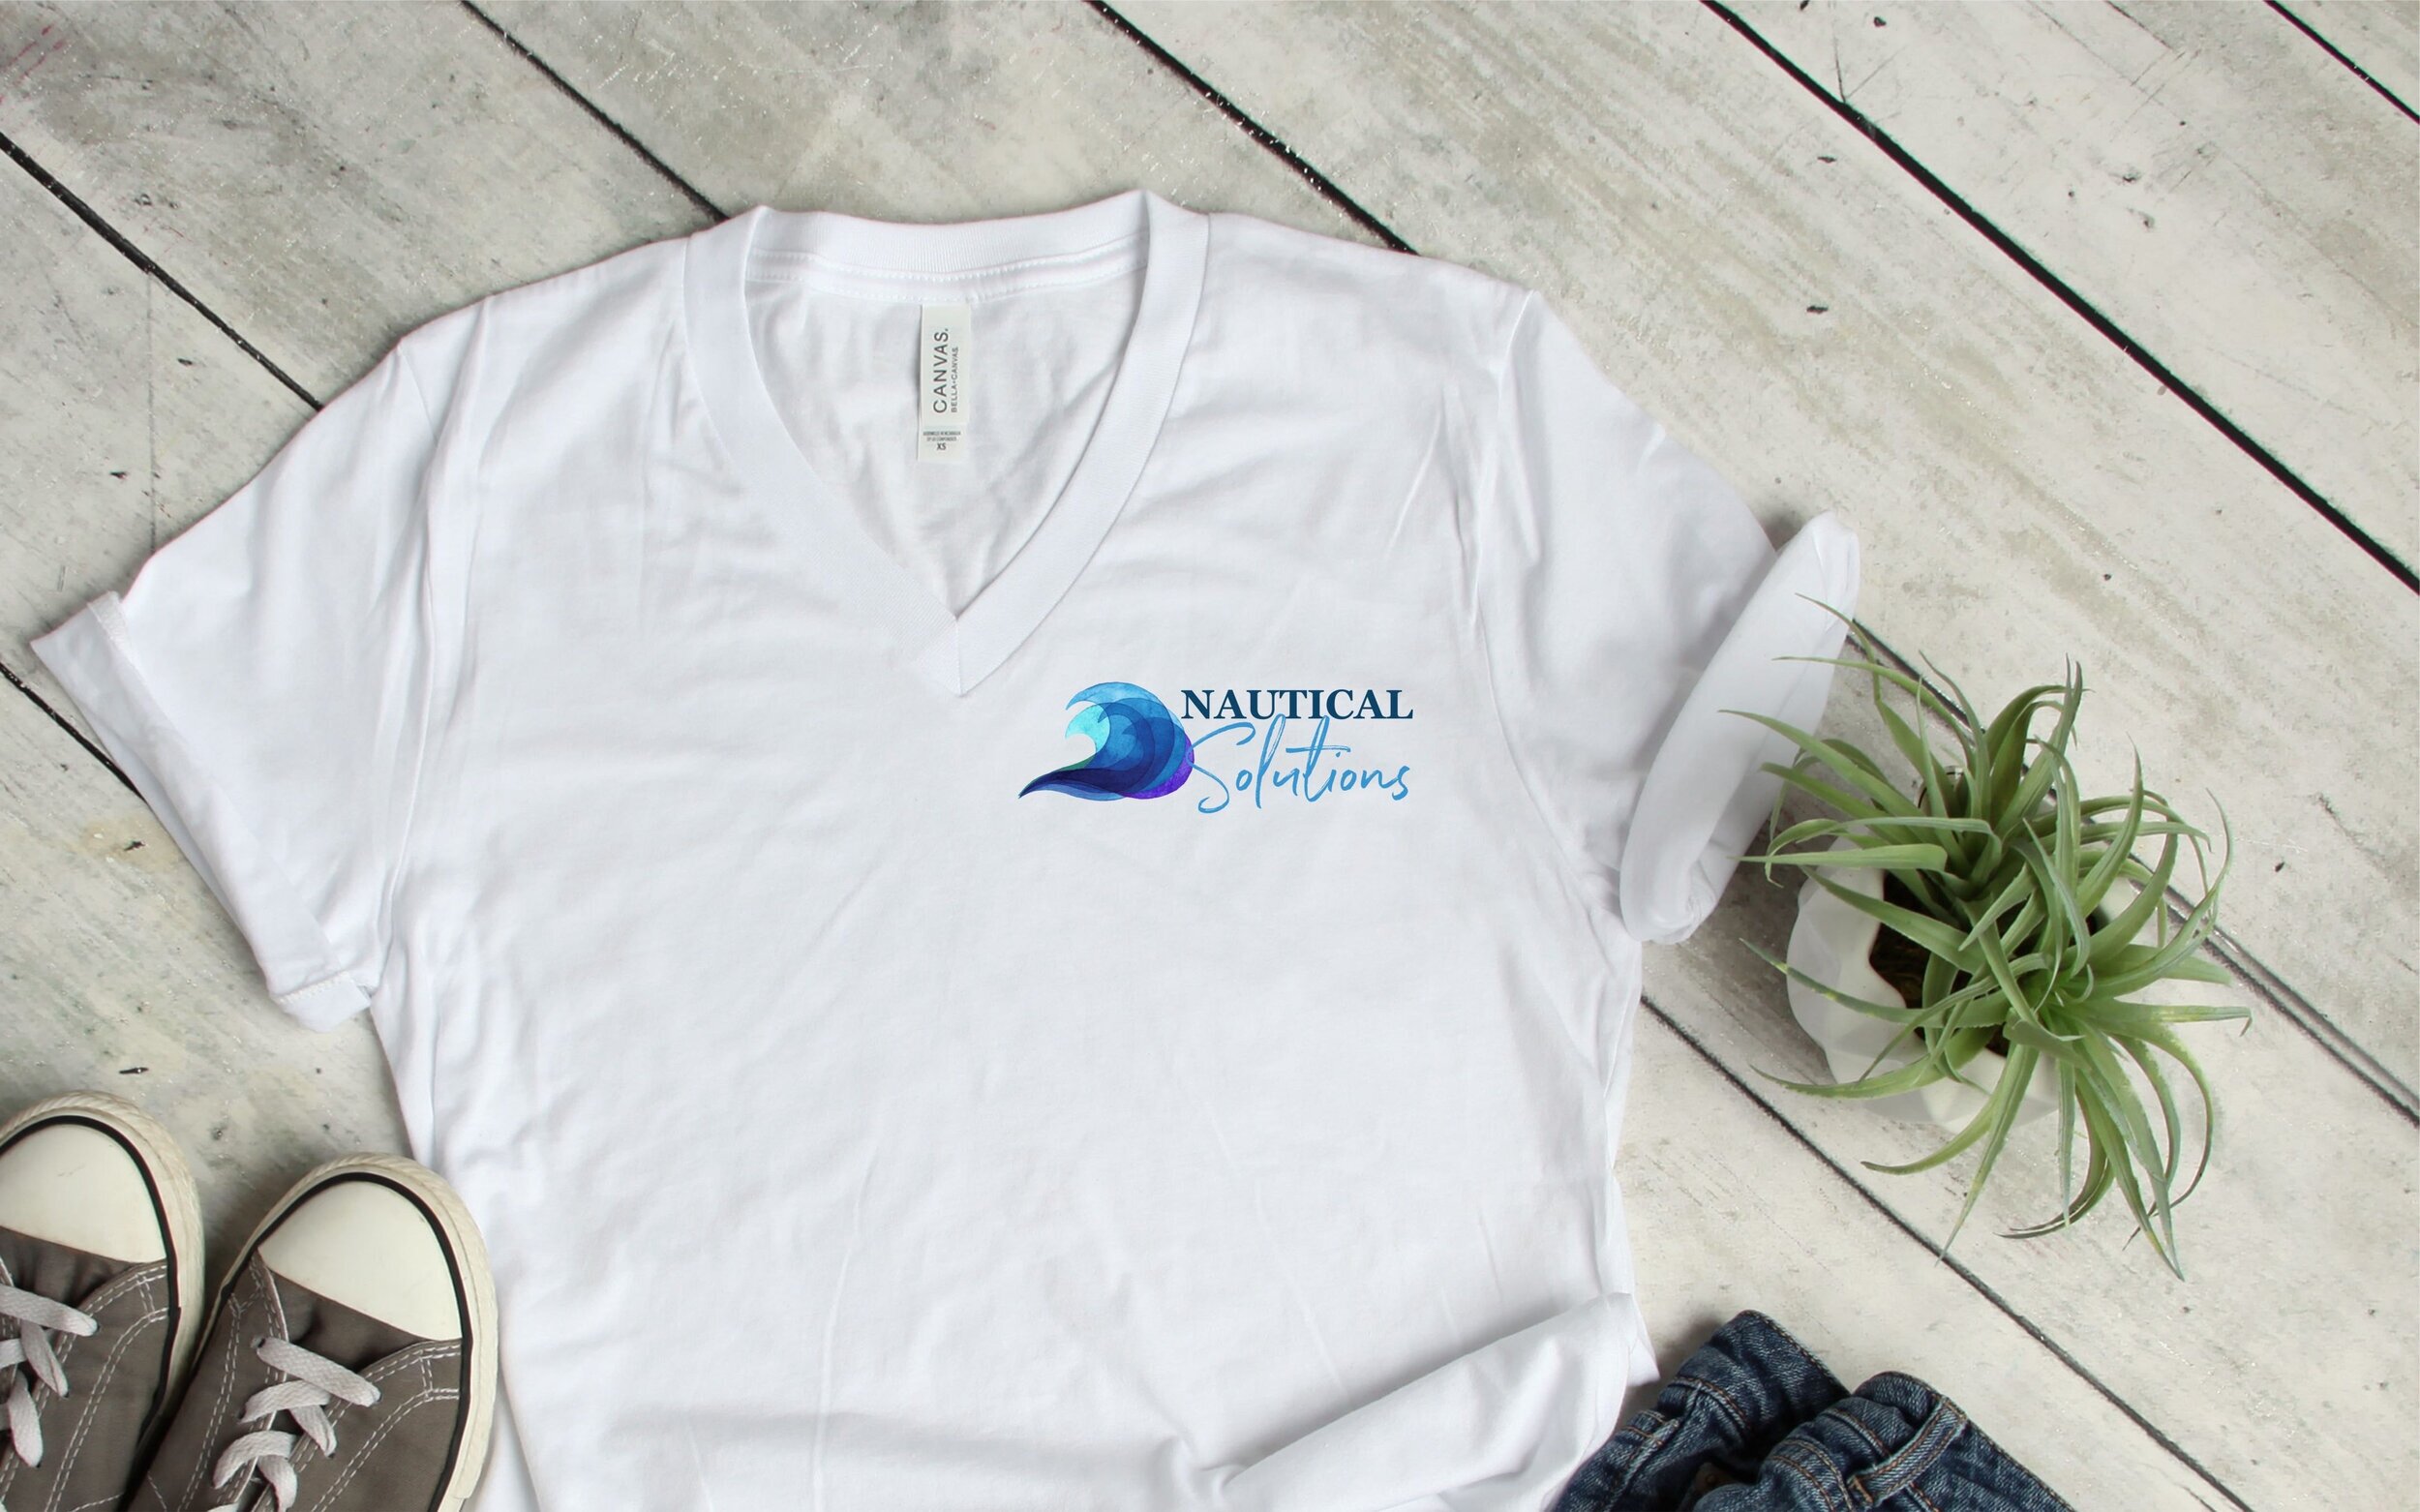 Nautical Solutions Shirts!